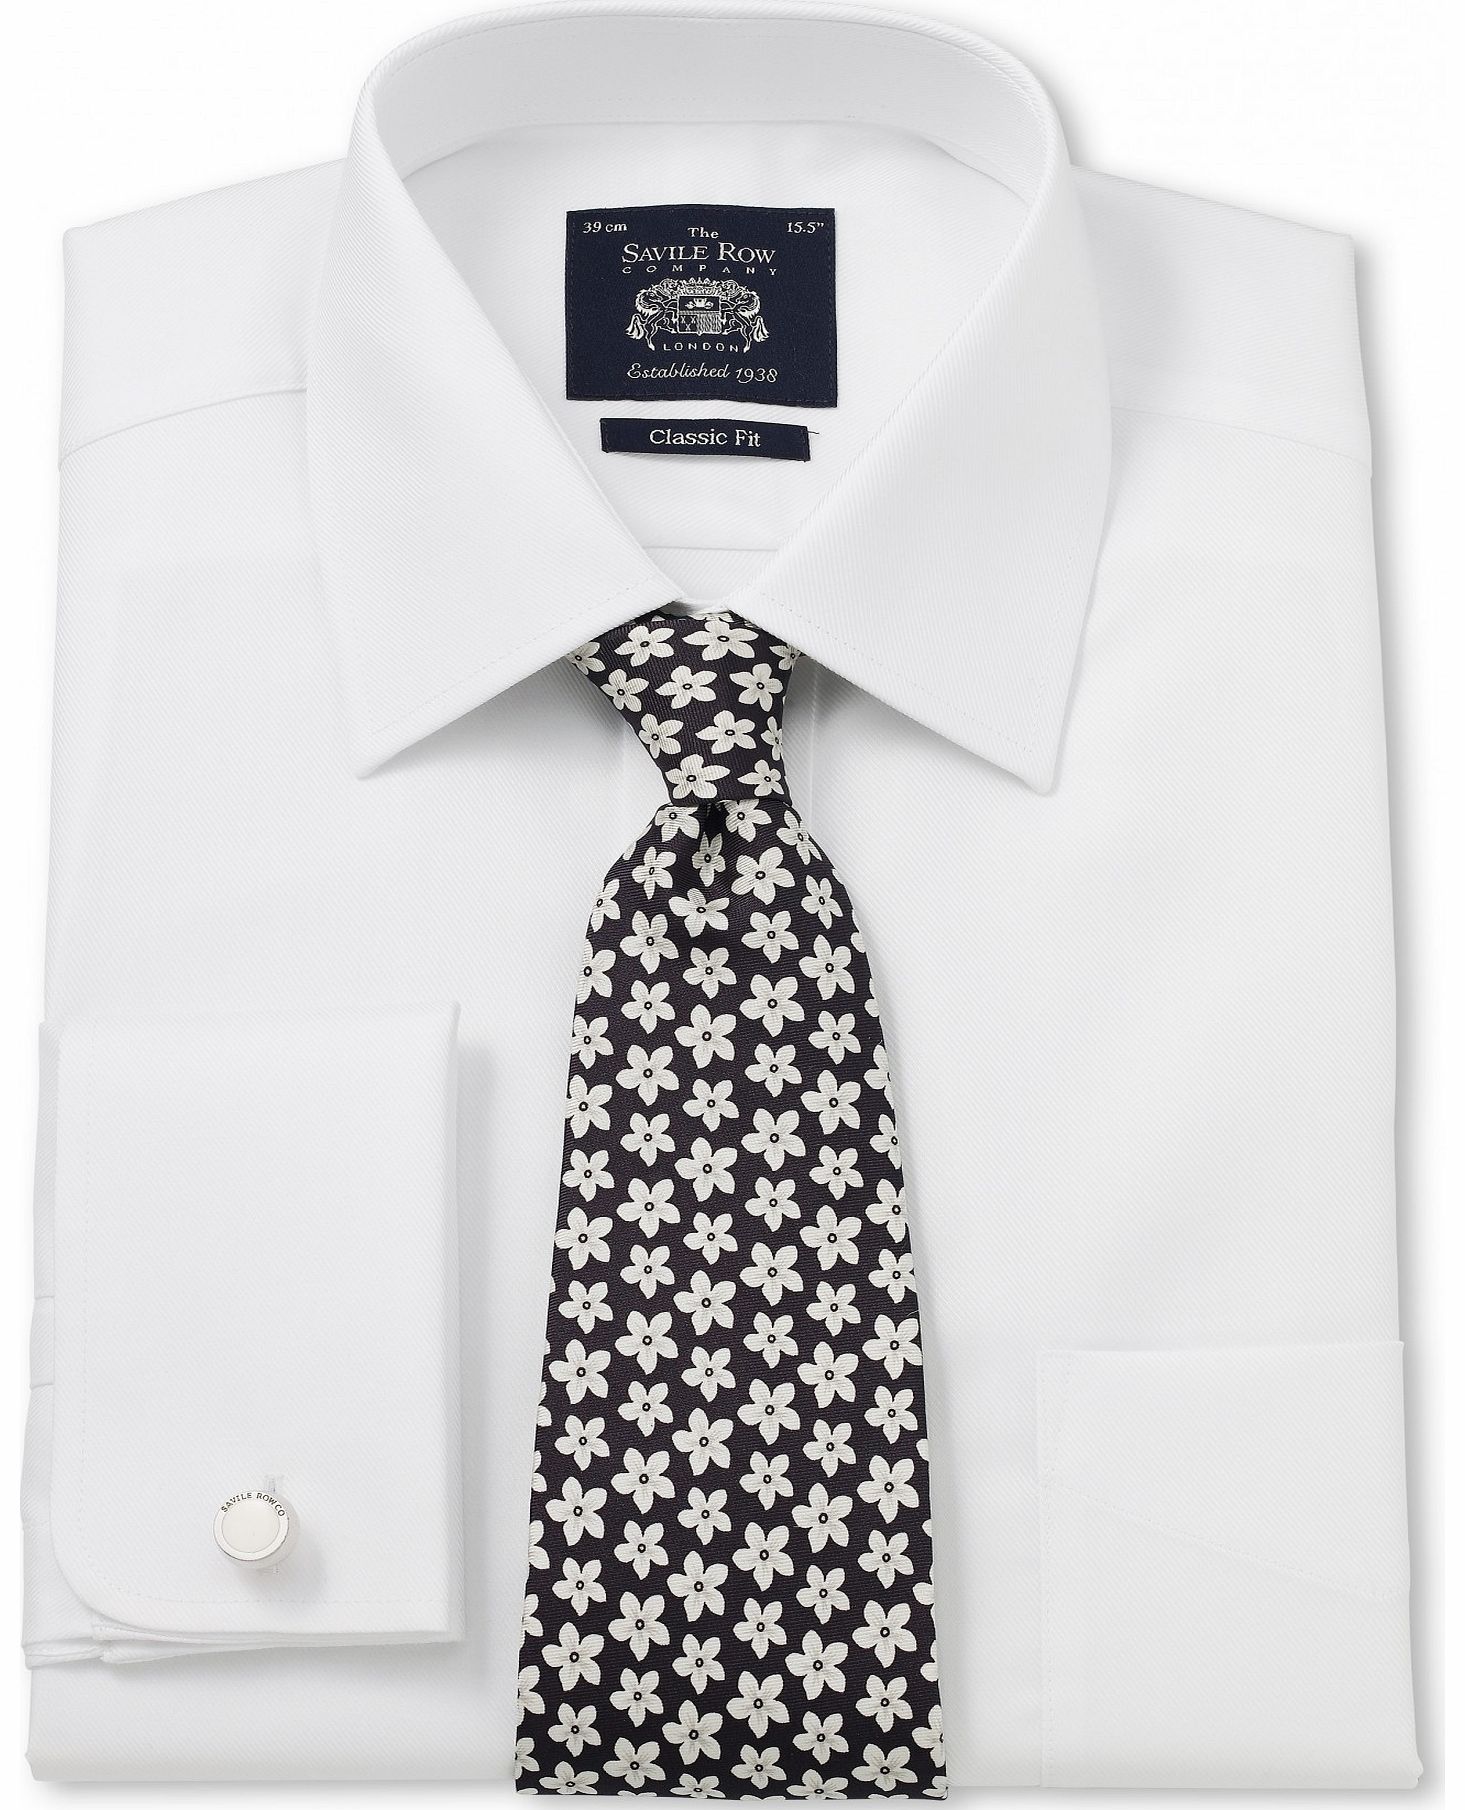 Savile Row Company White Twill Windsor Collar Classic Fit Shirt 17